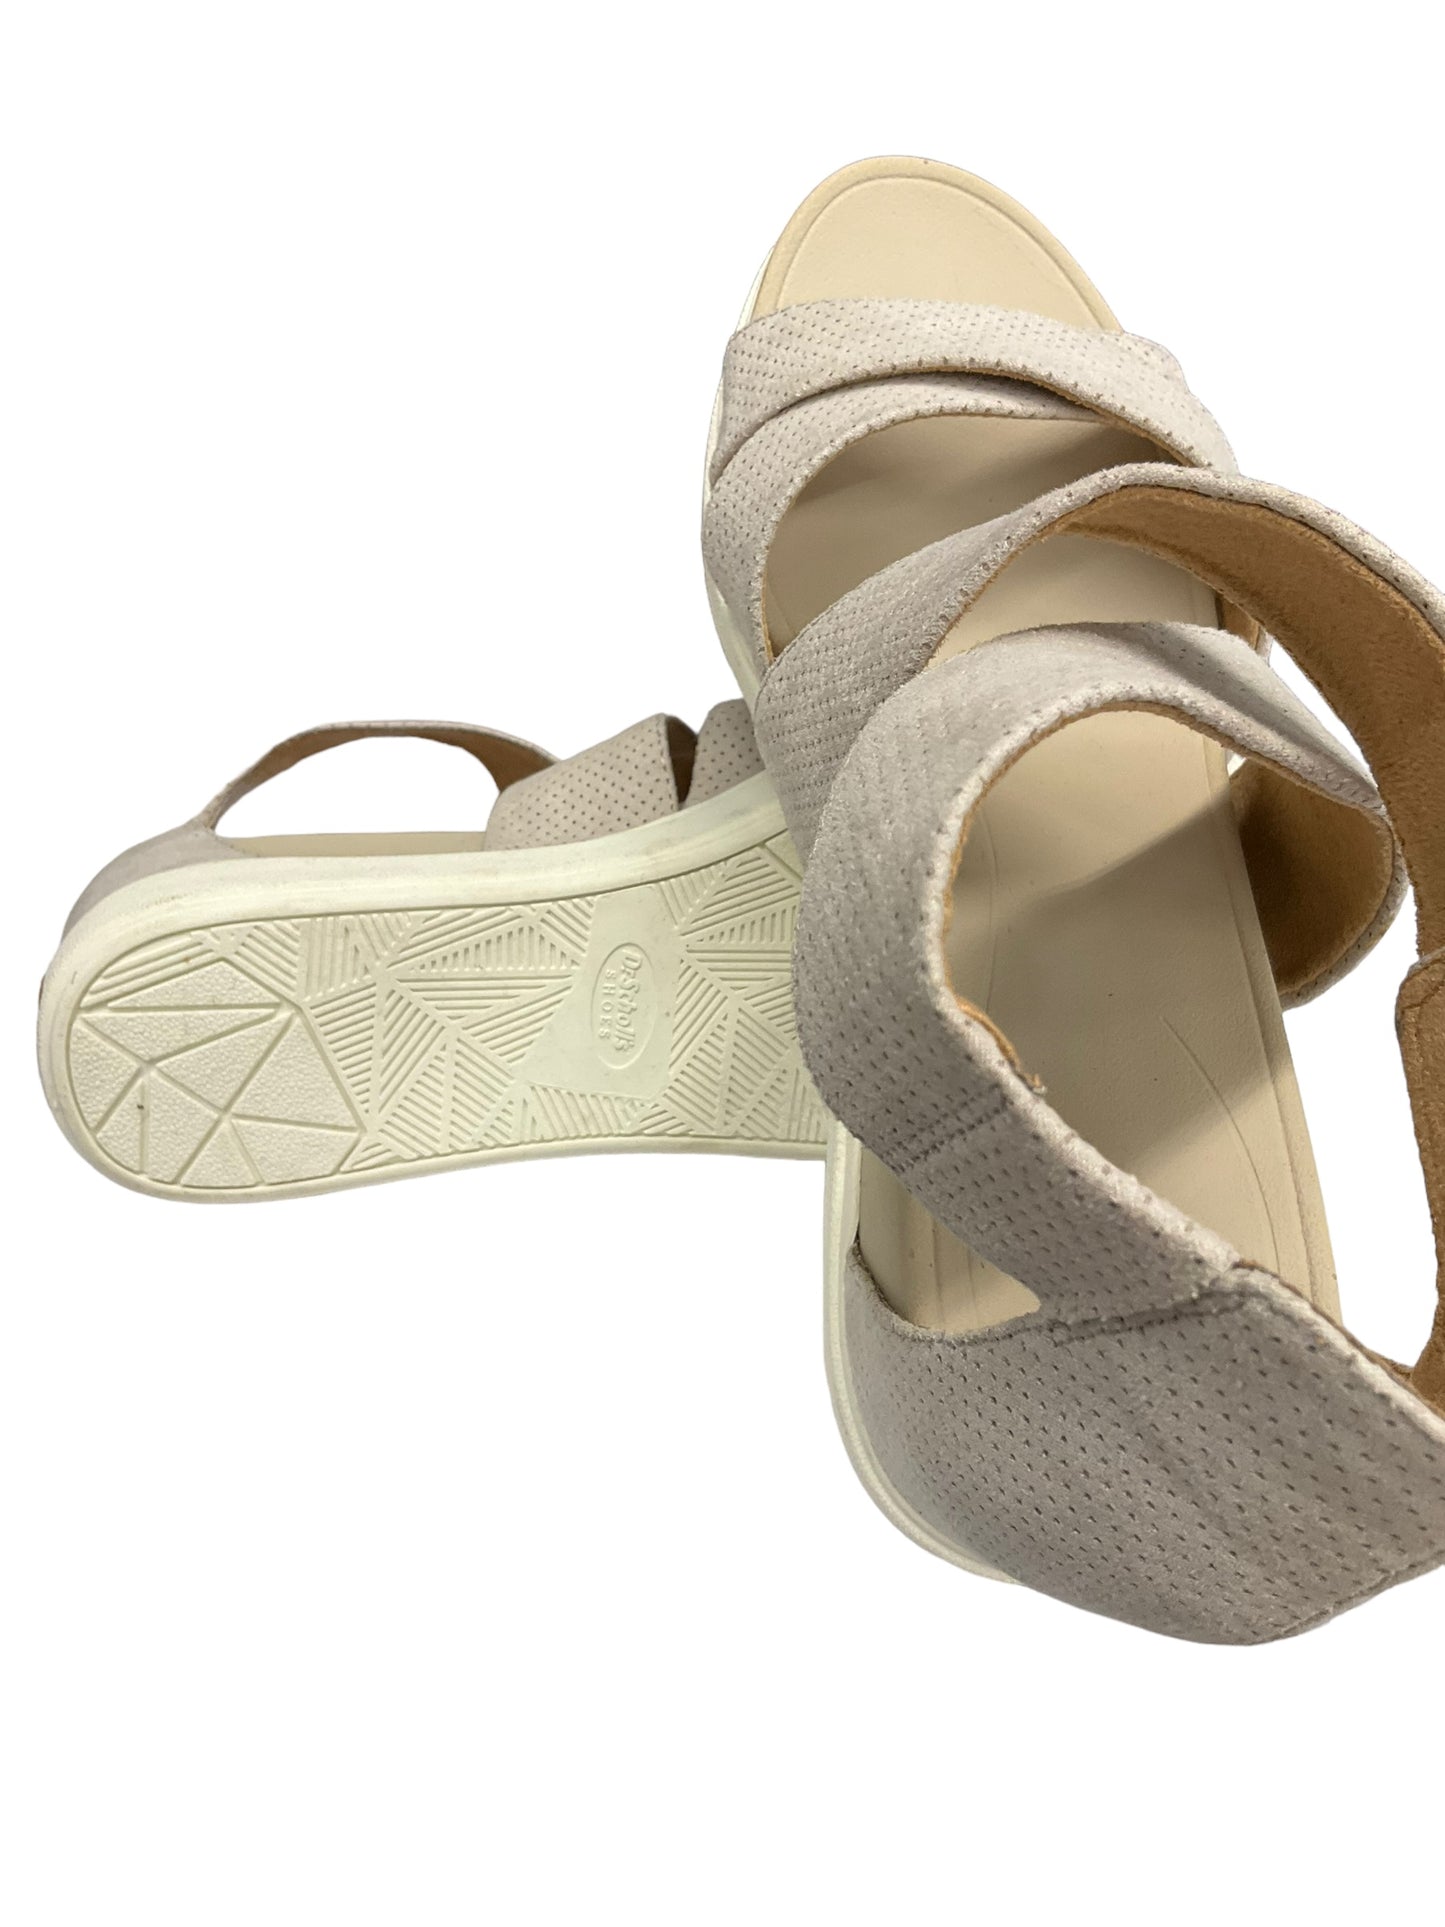 Sandals Heels Wedge By Dr Scholls  Size: 9